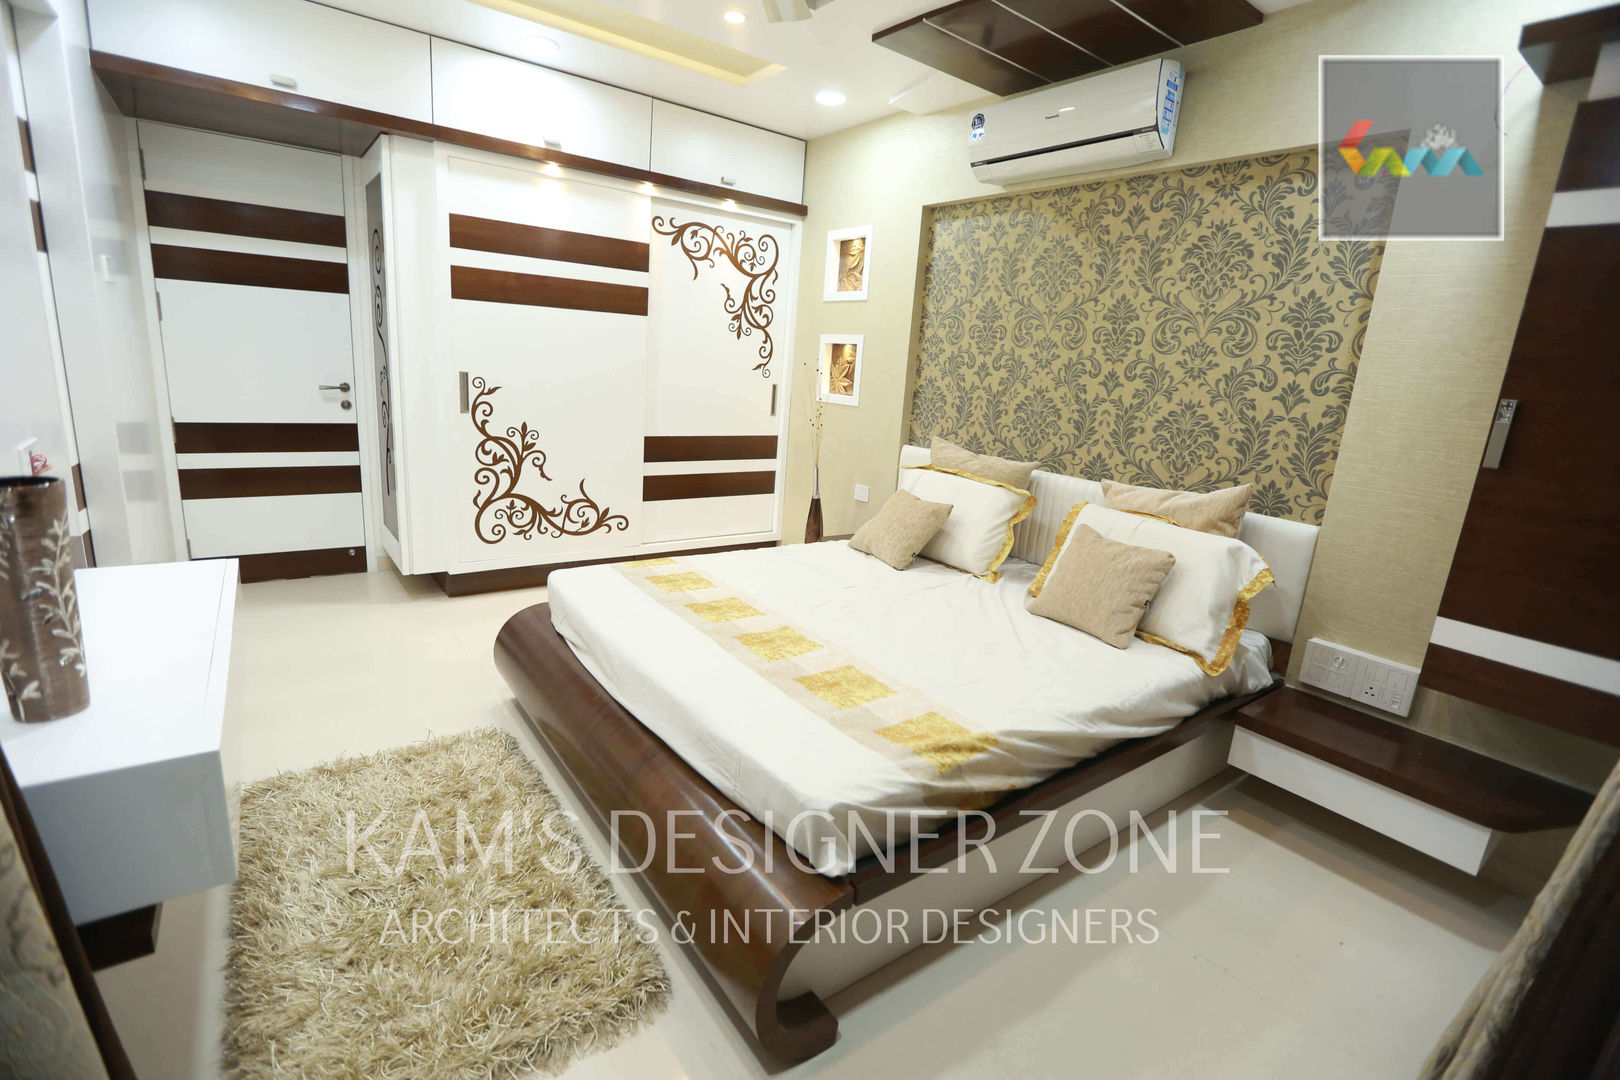 Bedroom Interior Design KAMS DESIGNER ZONE Classic style bedroom